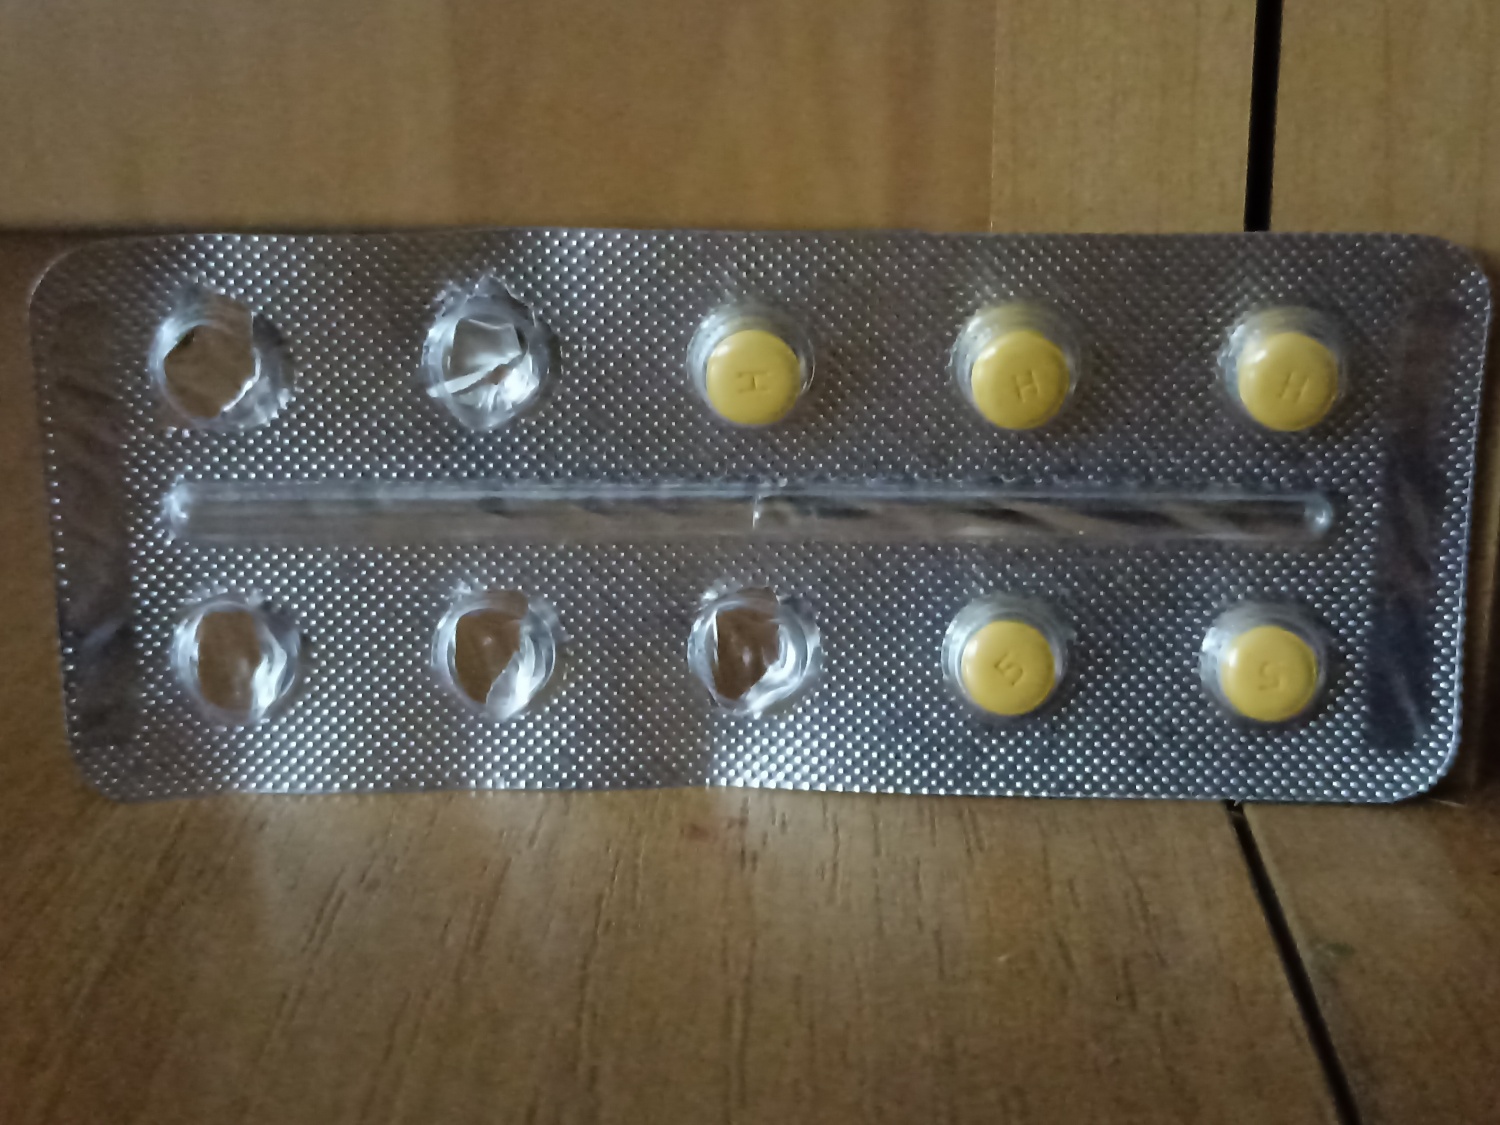 Лекарственный препарат Hetero Таблетки Летзол 2,5 мг | отзывы